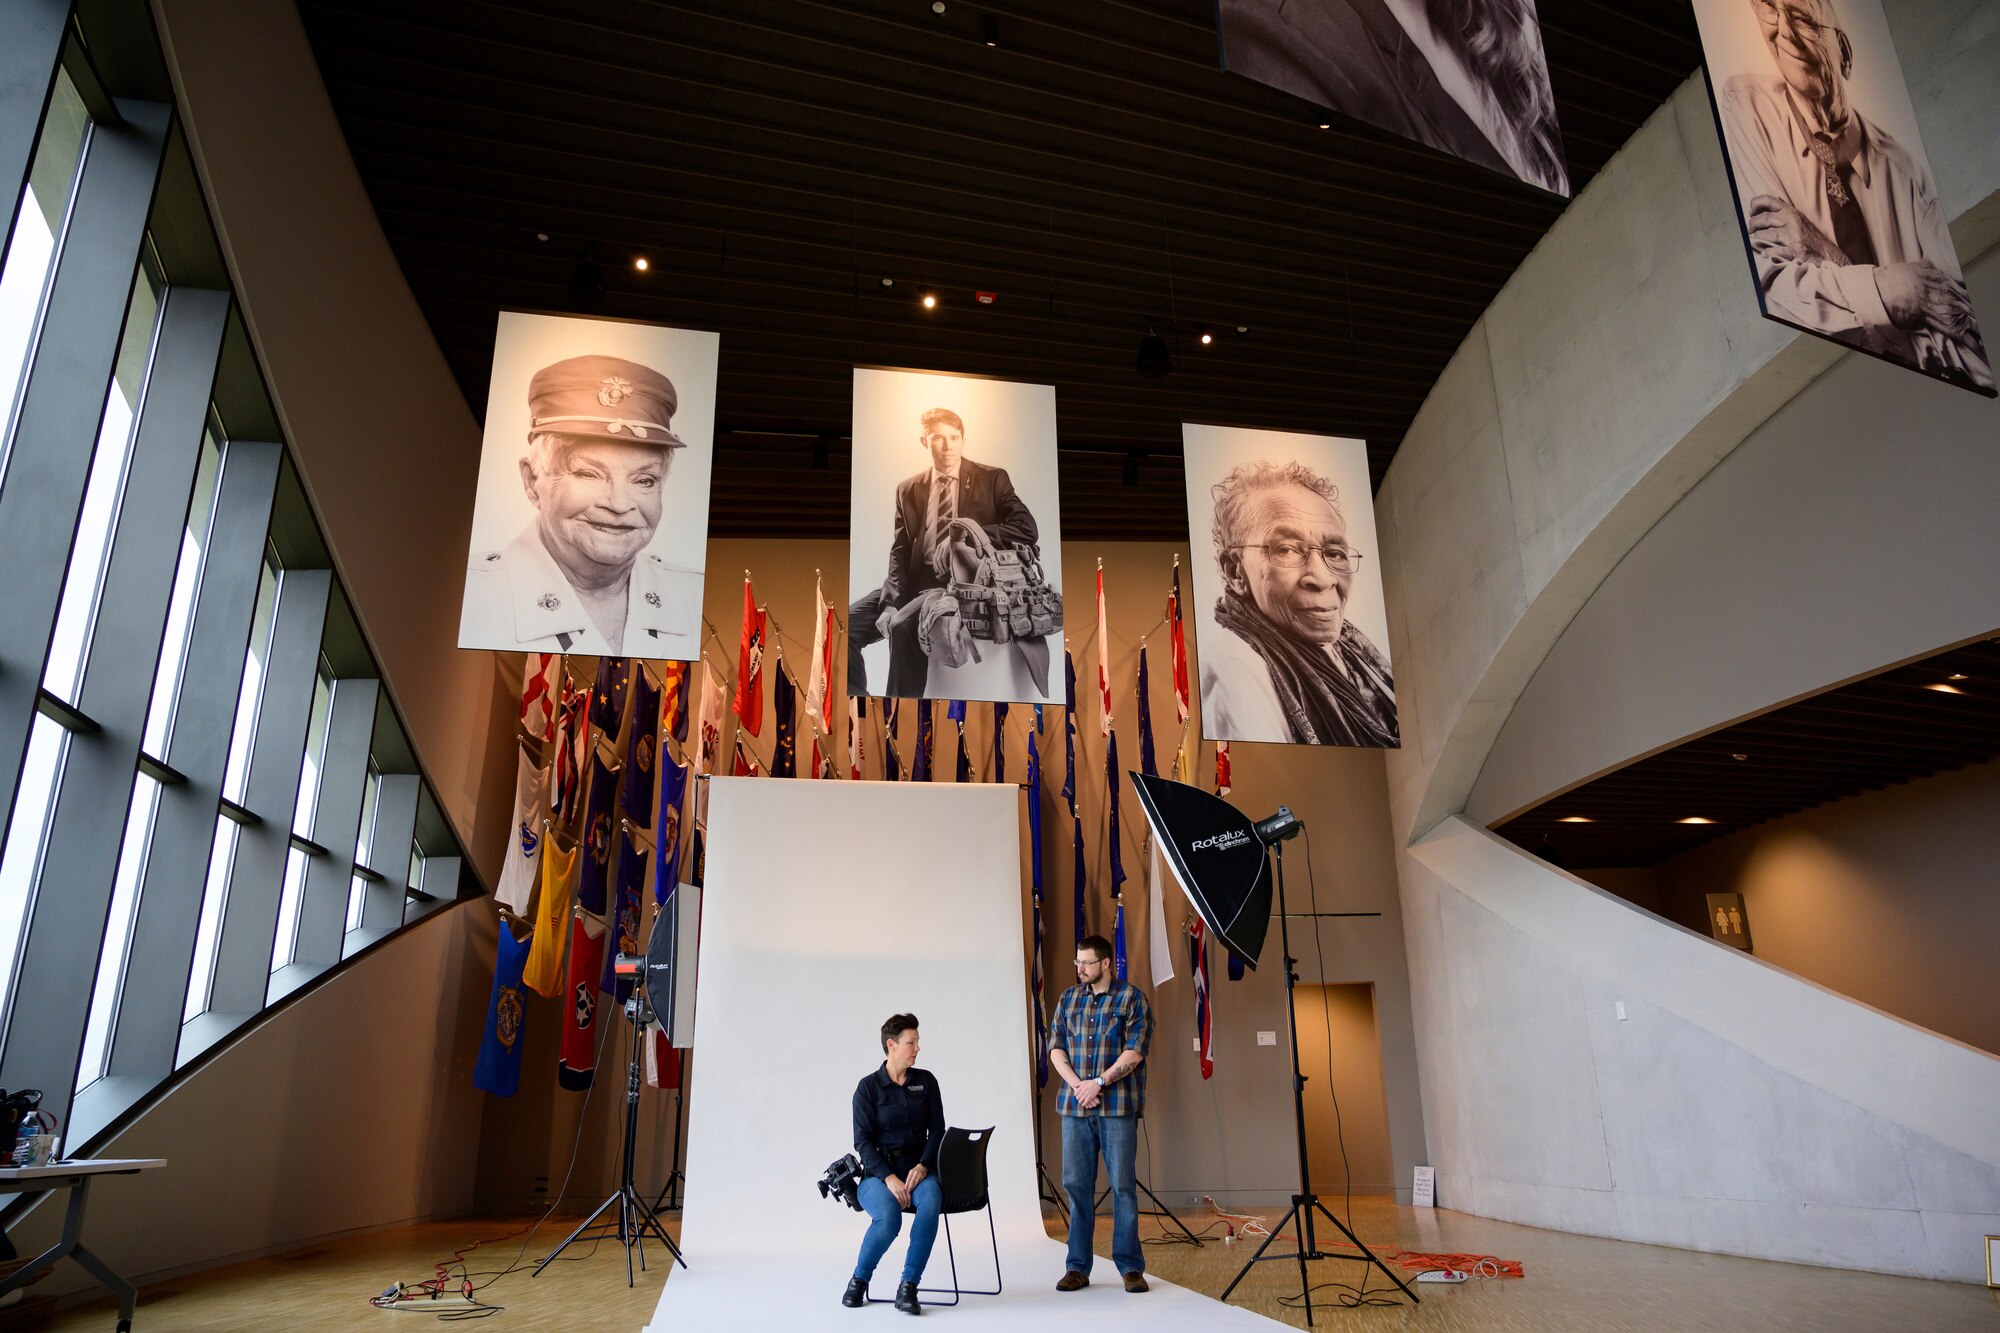 veterans portraits hanging in display above portable studio